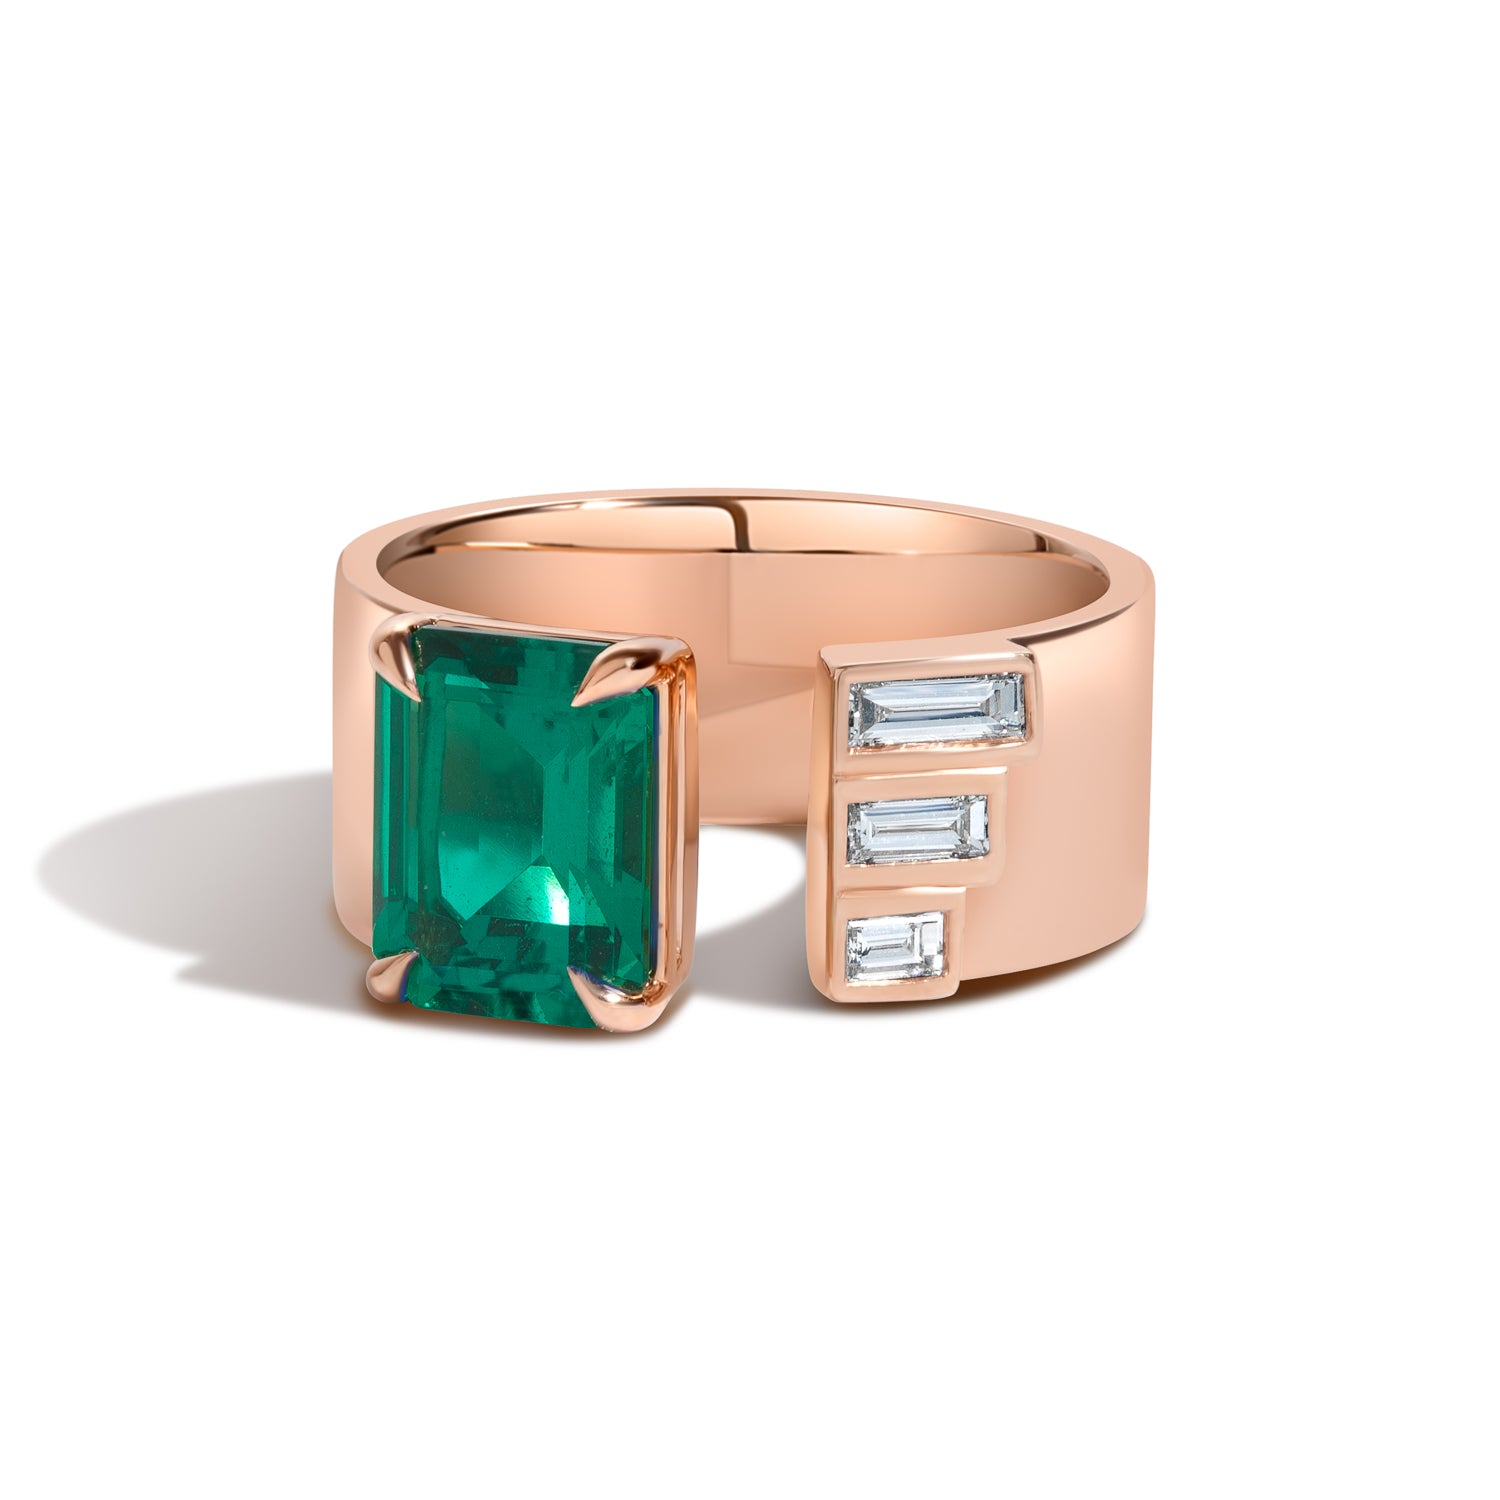 Shahla Karimi Jewelry Emerald Gap Band w/ Baguettes 14K Rose Gold 